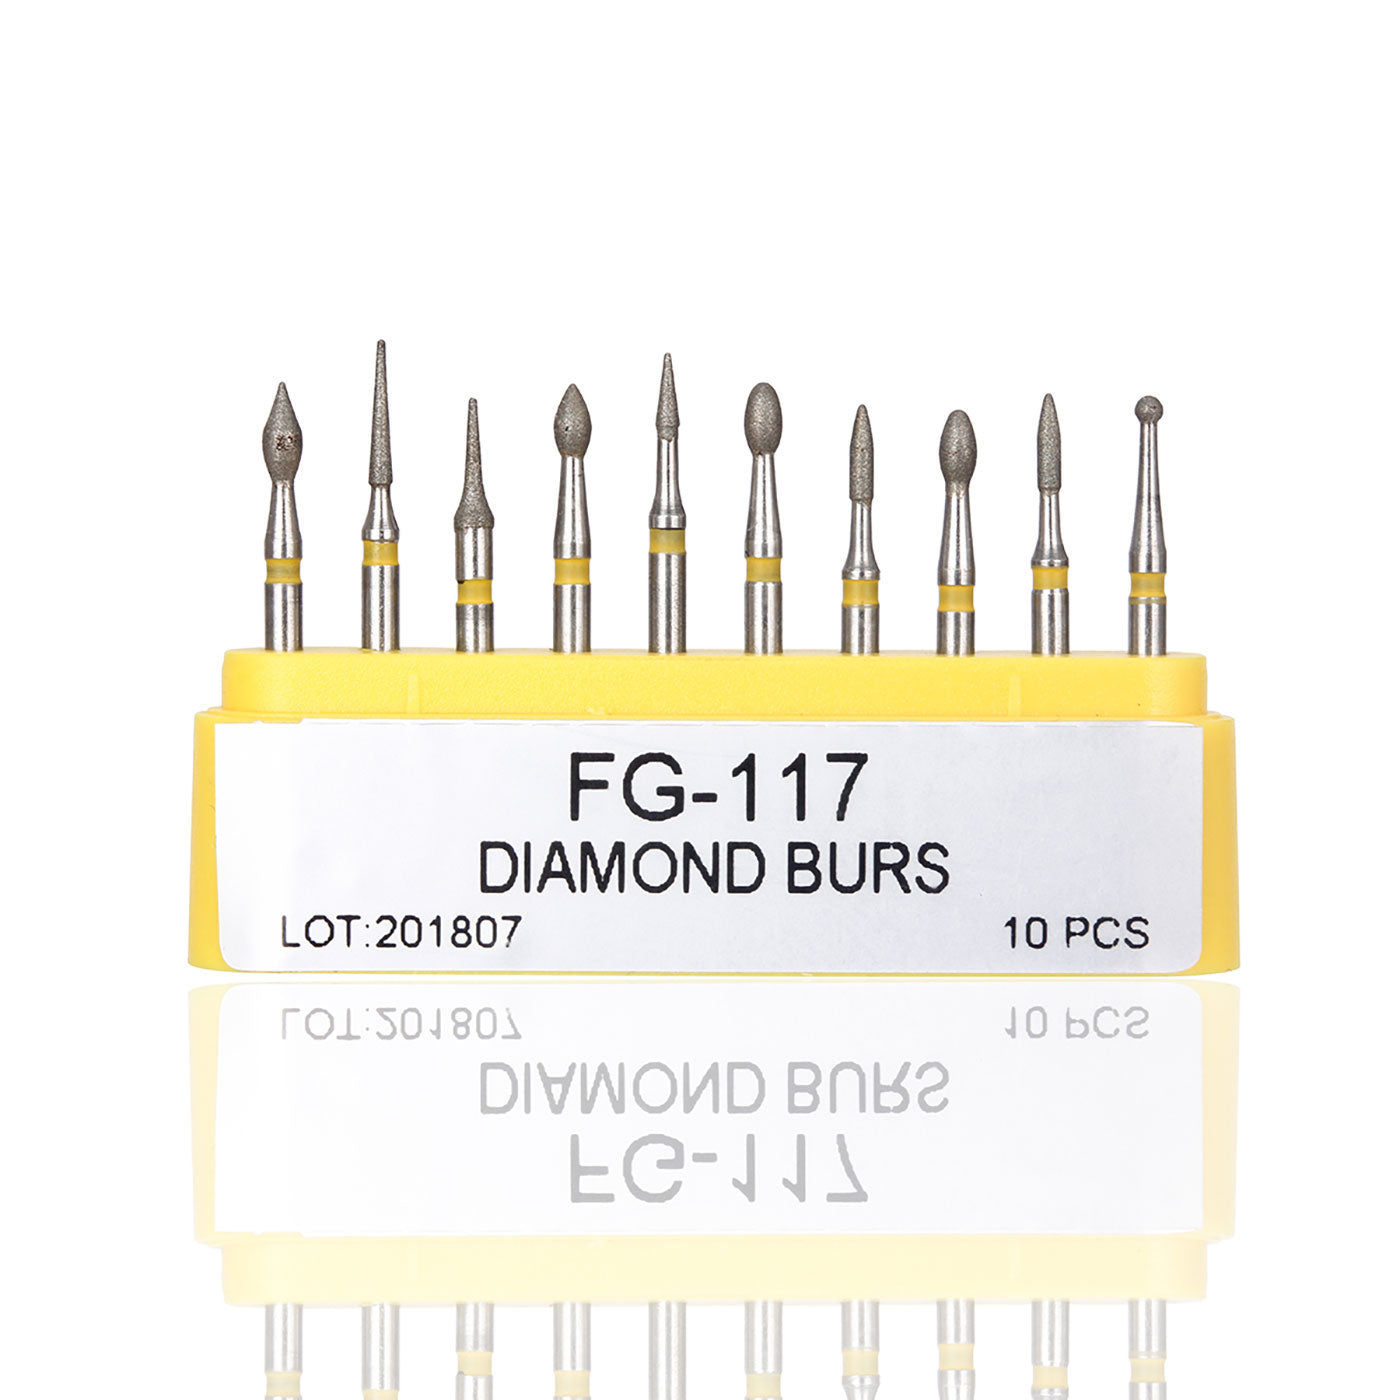 AZDENT Dental Diamond Bur FG-117 Composite Repair Kit 10pcs/Kit - azdentall.com